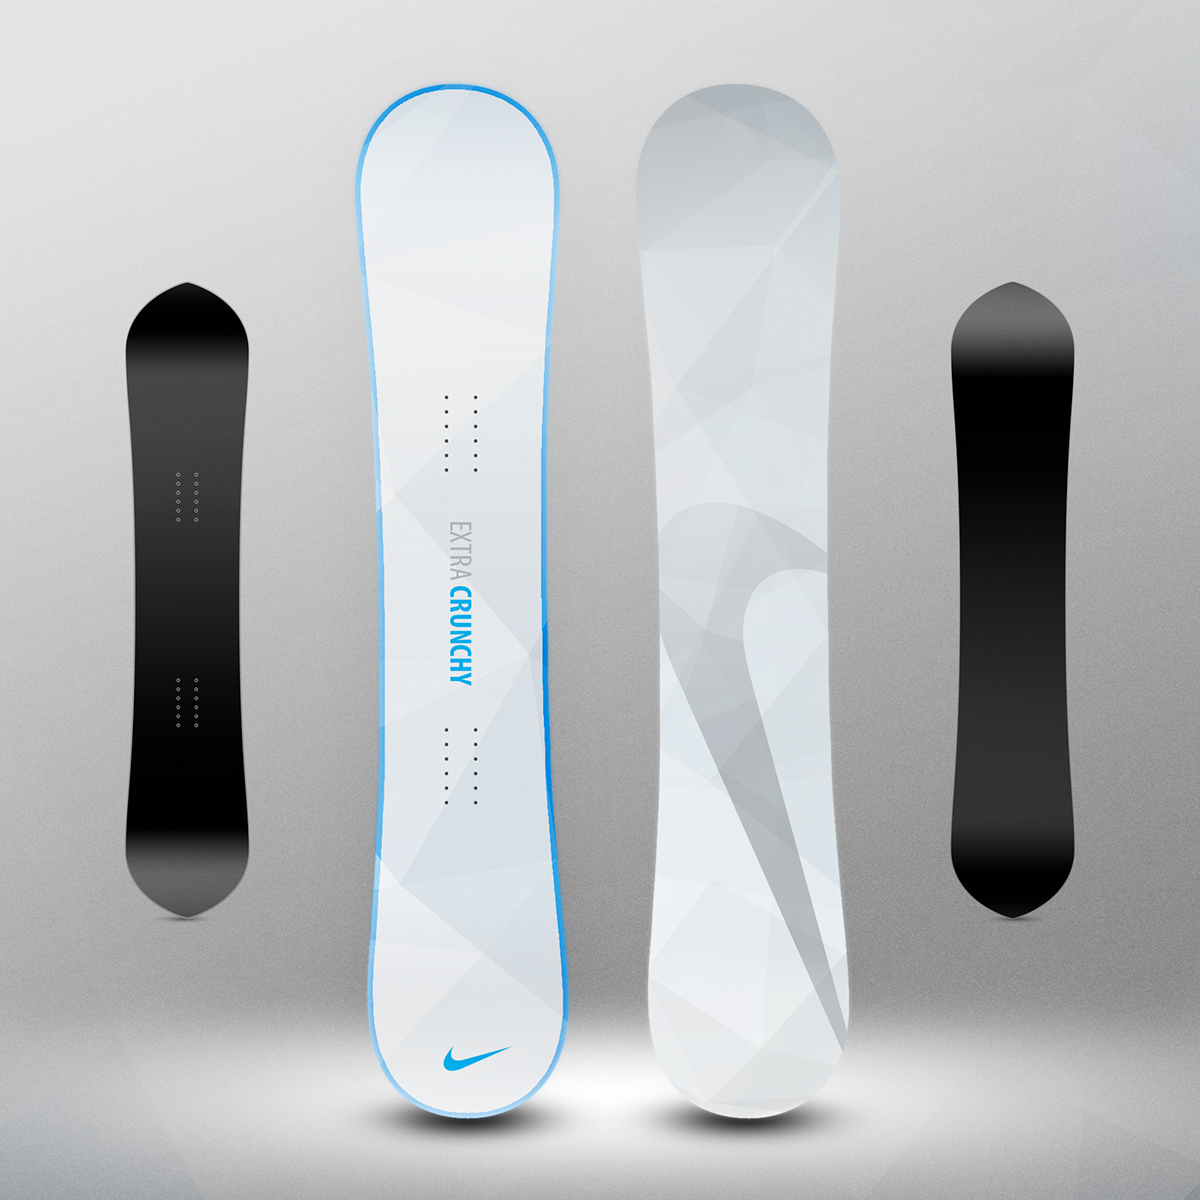 snowboard snow Nike mock product skiing winter Custom shred